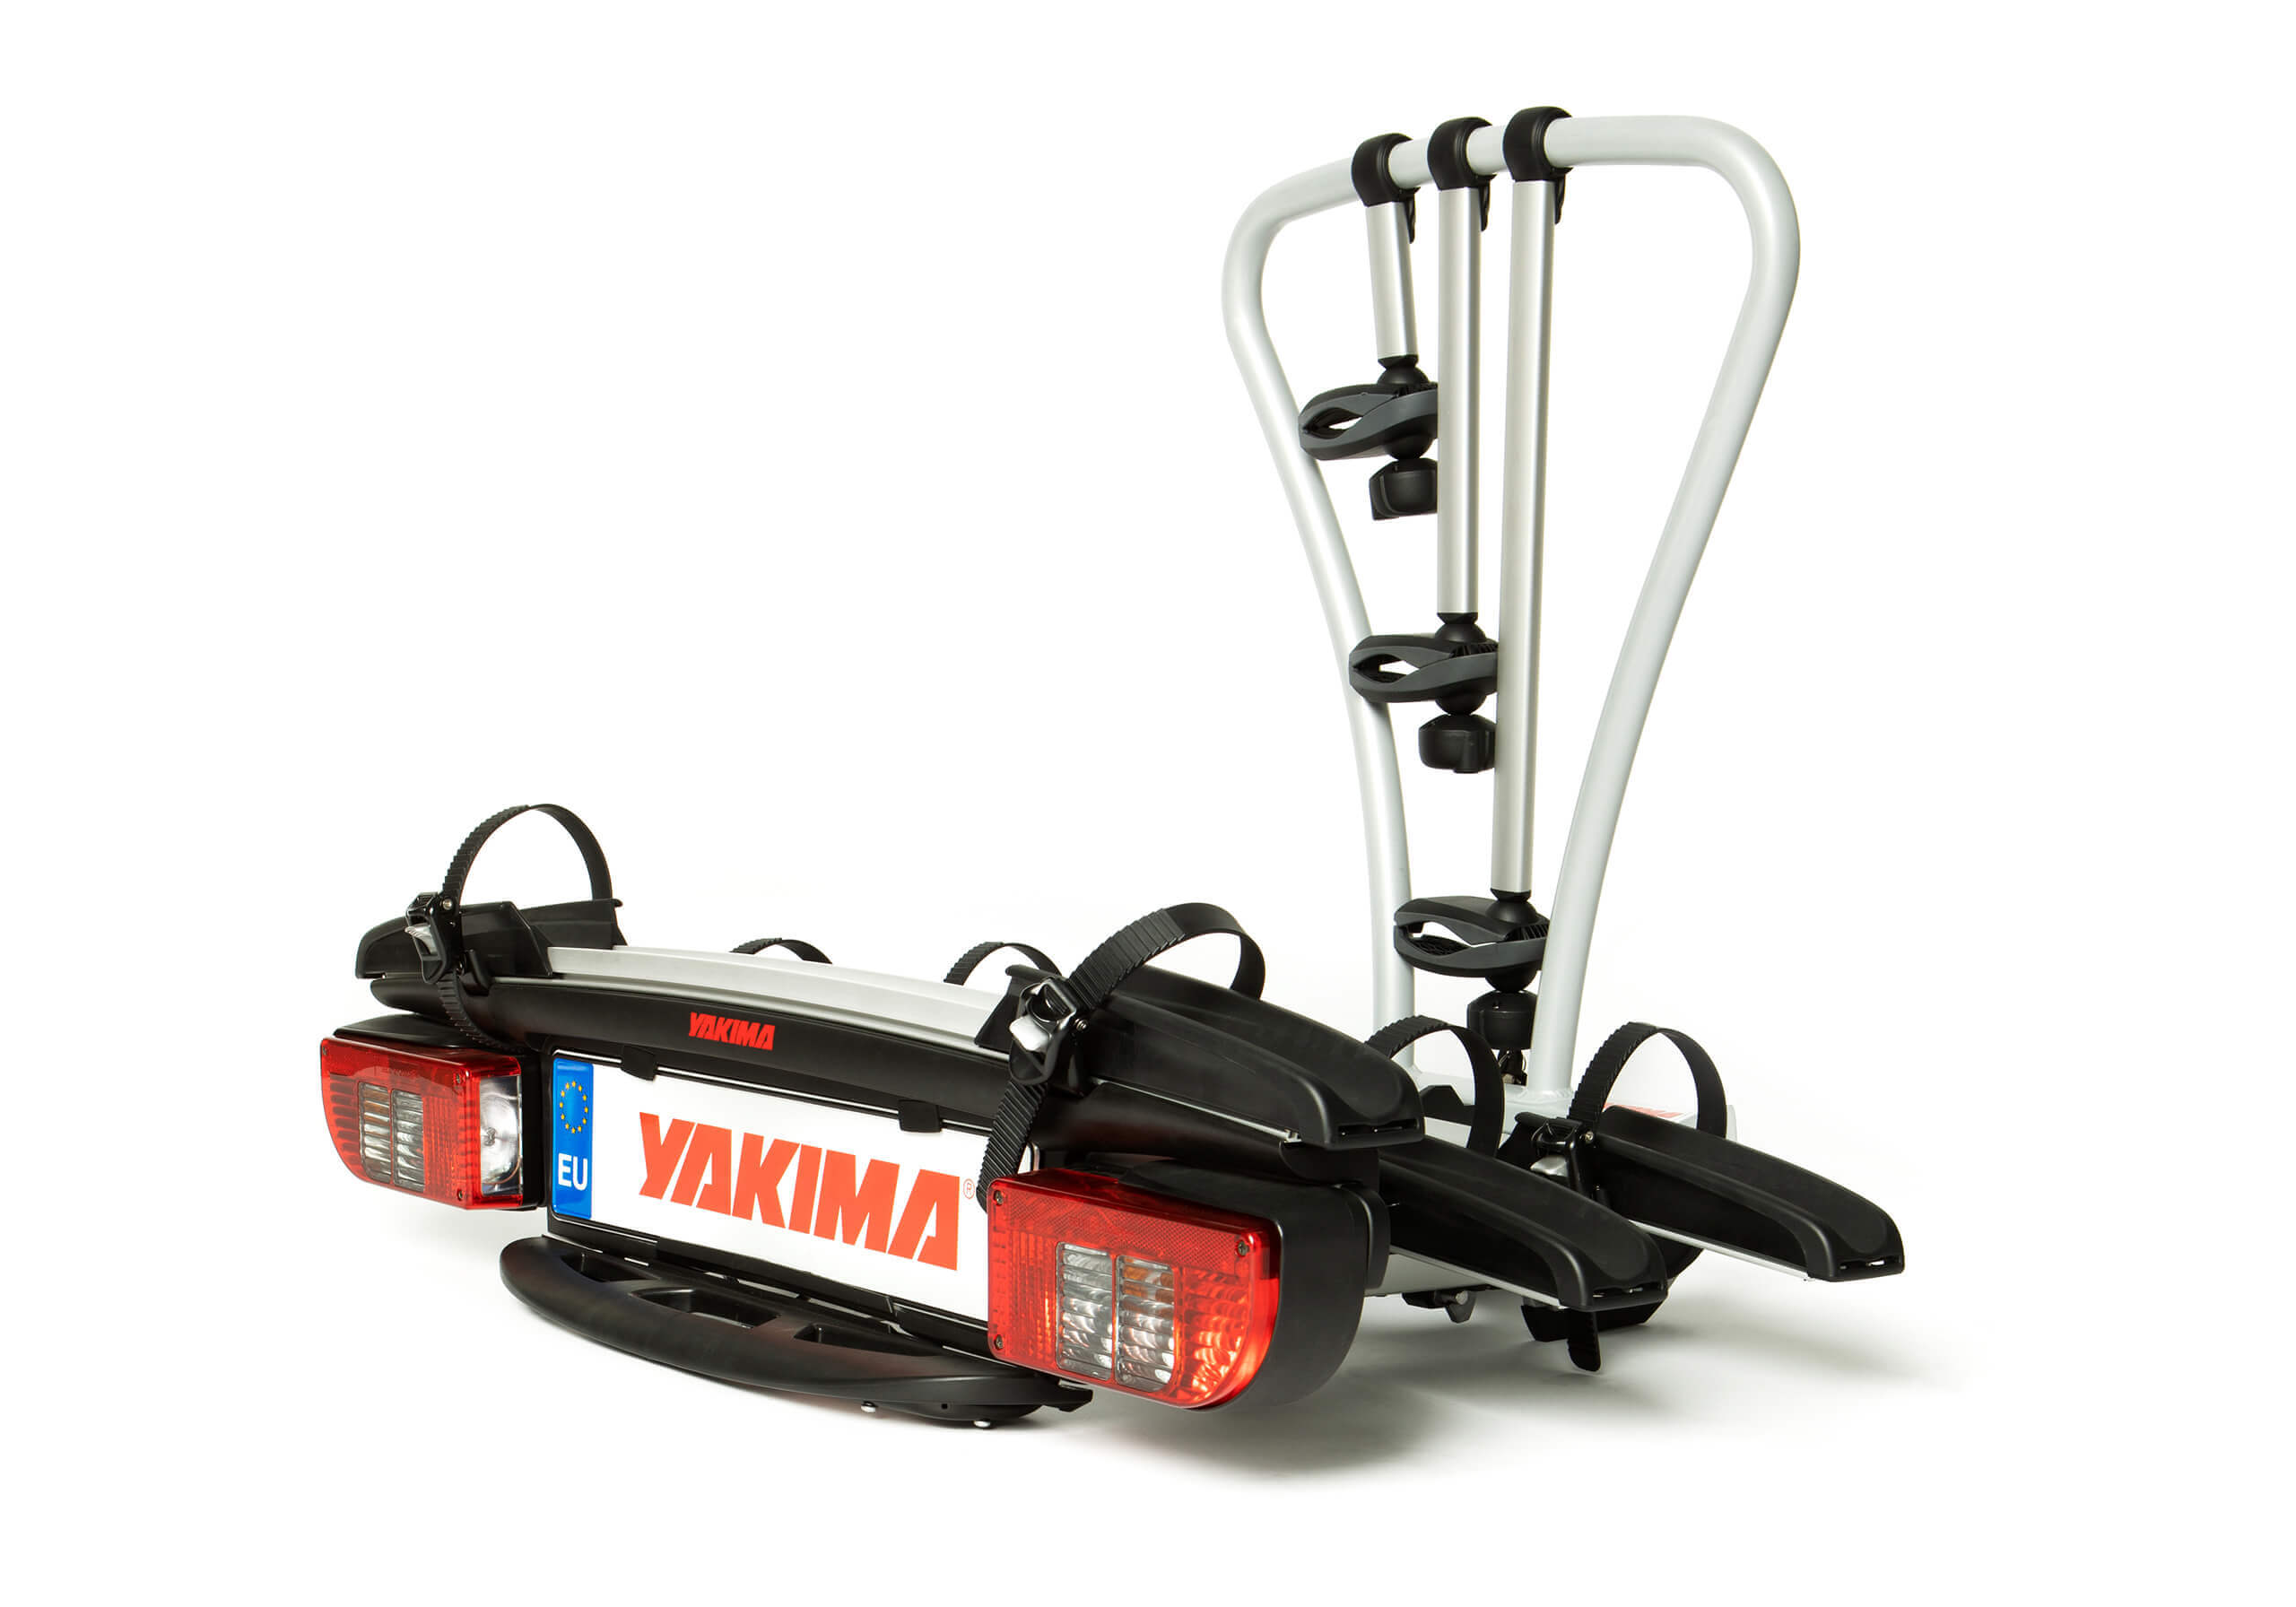 :Yakima JustClick 3 bike tow bar carrier no. 8002487 - Return no. 133